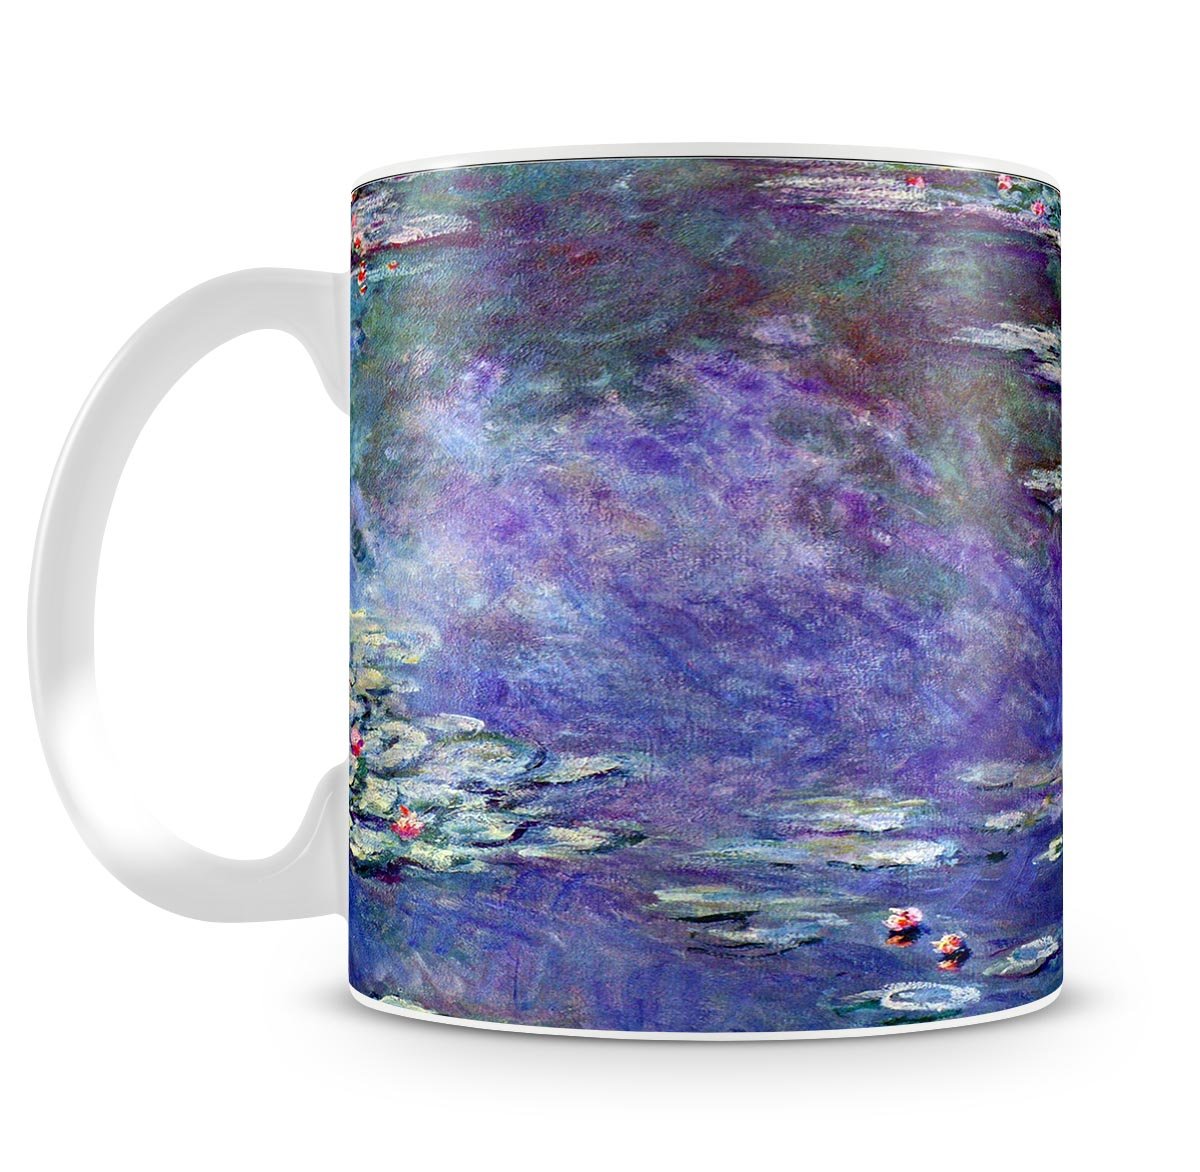 Water Lily Pond 3 by Monet Mug - Canvas Art Rocks - 4